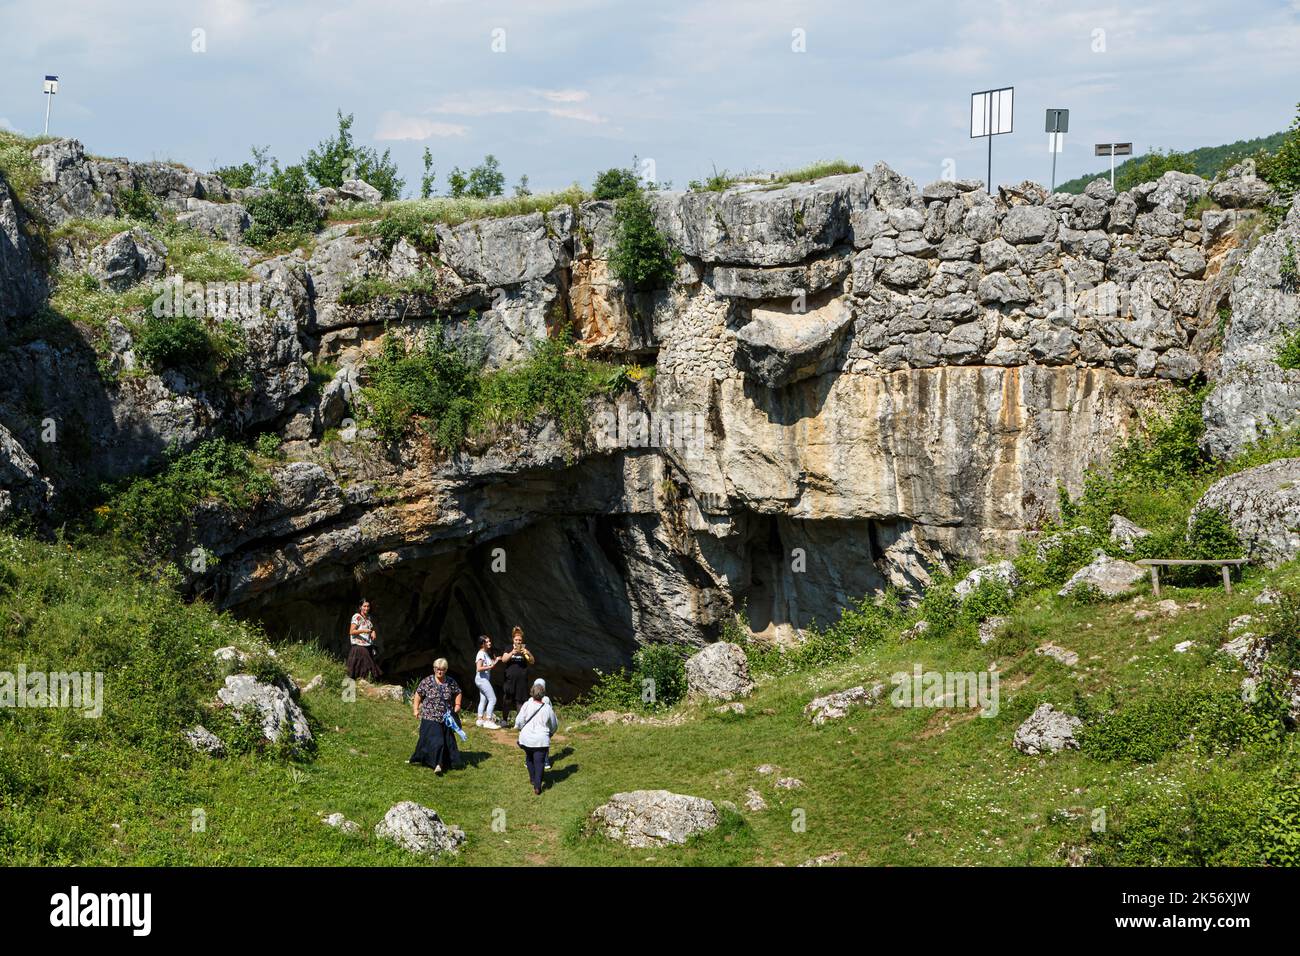 God’s bridge ( Podul lui Dumnezeu ) - natural rock bridge formed by a collapsed cave on june 29, 2020 in Ponoarele, Mehedinti, Romania Stock Photo